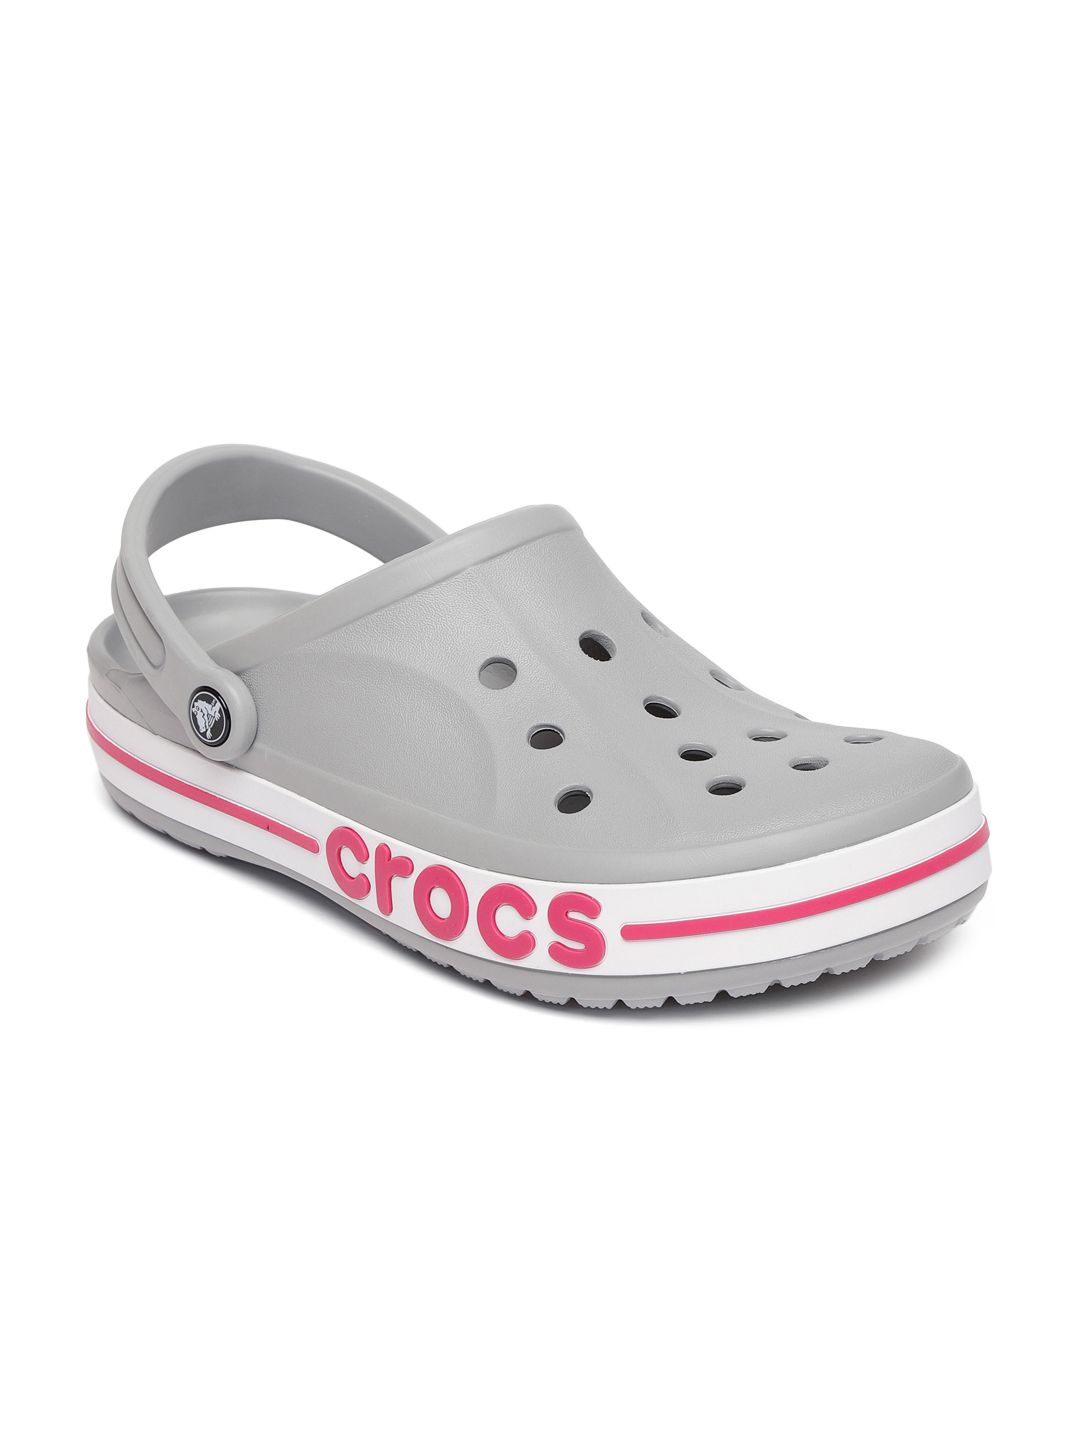 Crocs Unisex Grey Solid Clogs Price in India